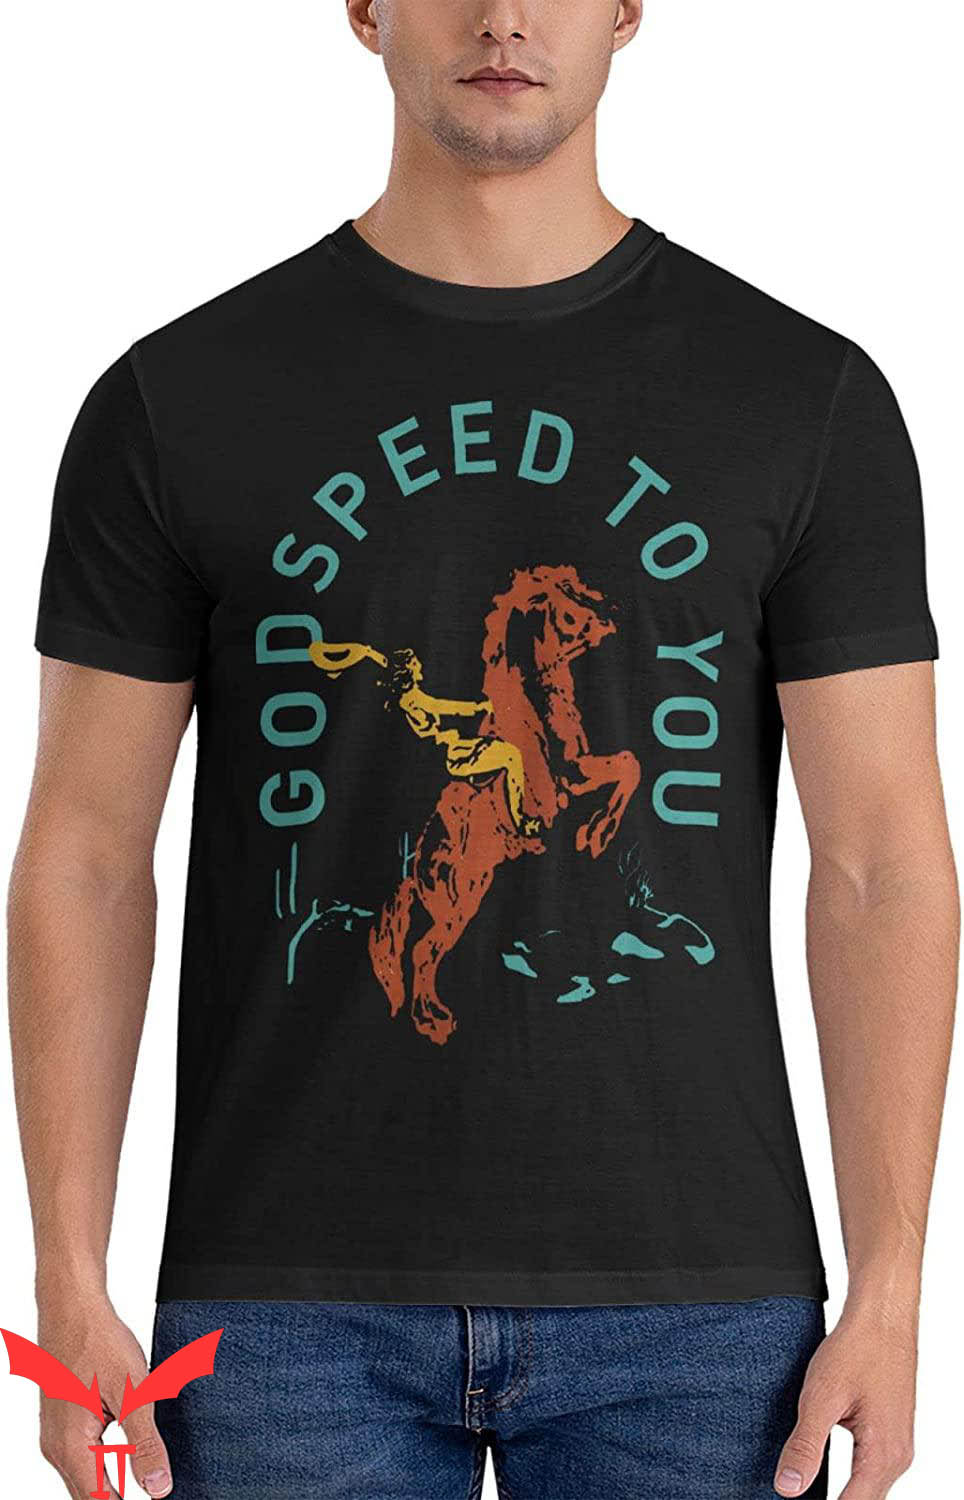 Godspeed T-Shirt